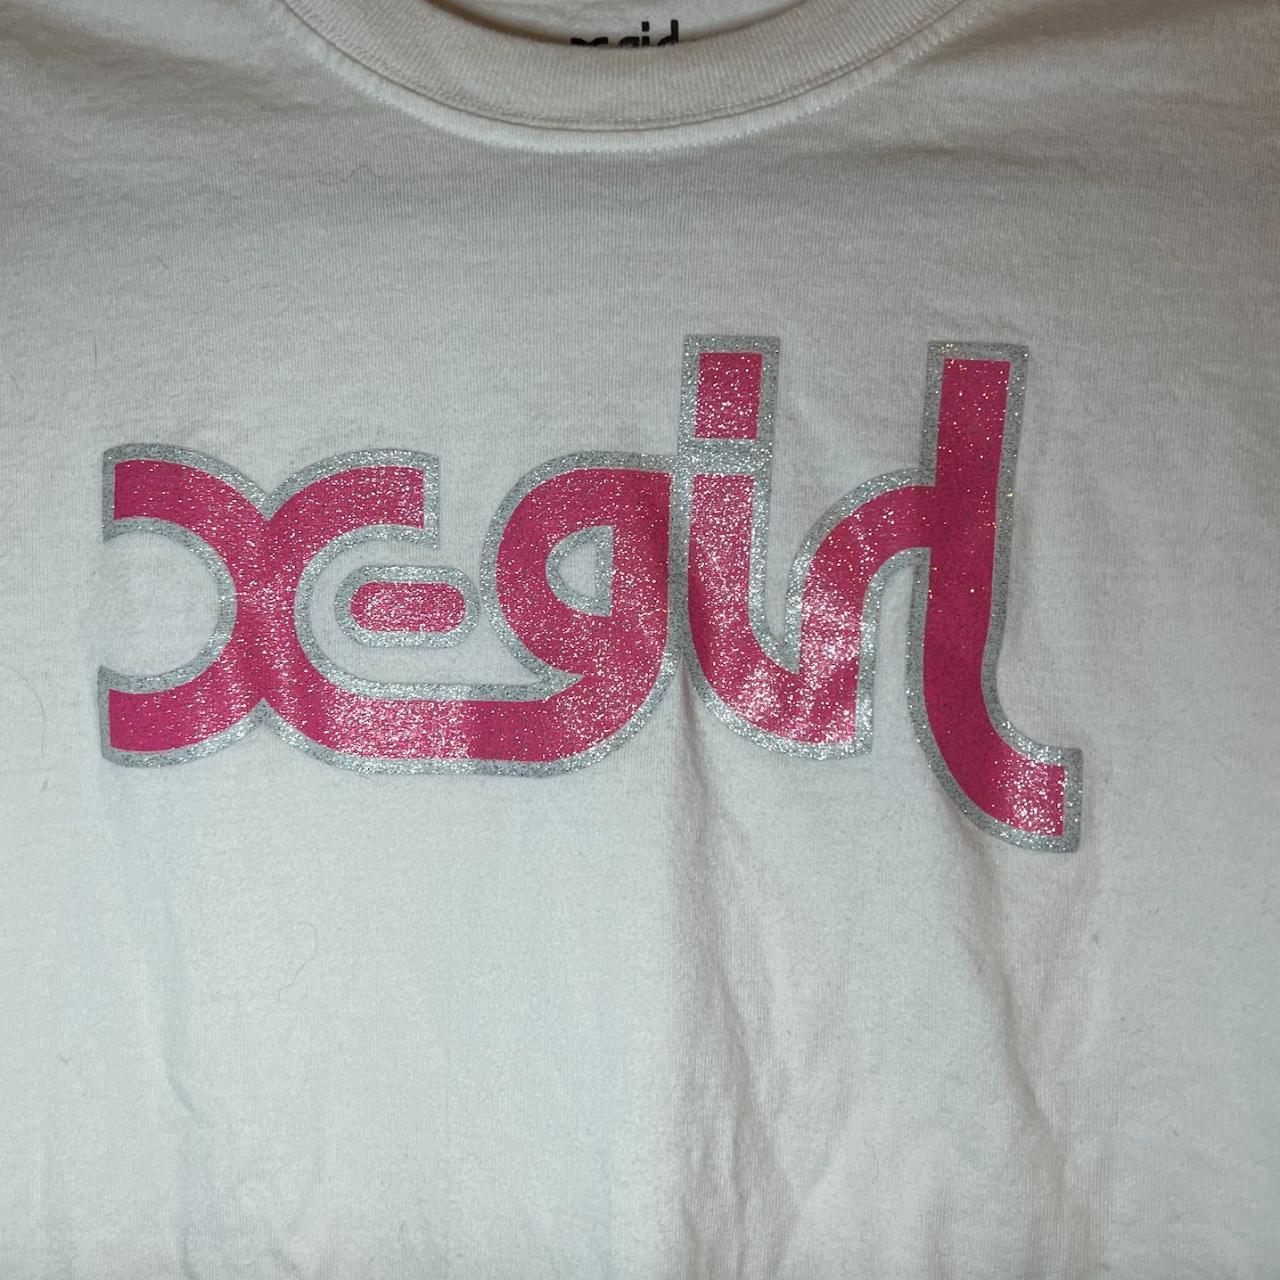 X-Girl  Women's White and Pink T-shirt (2)